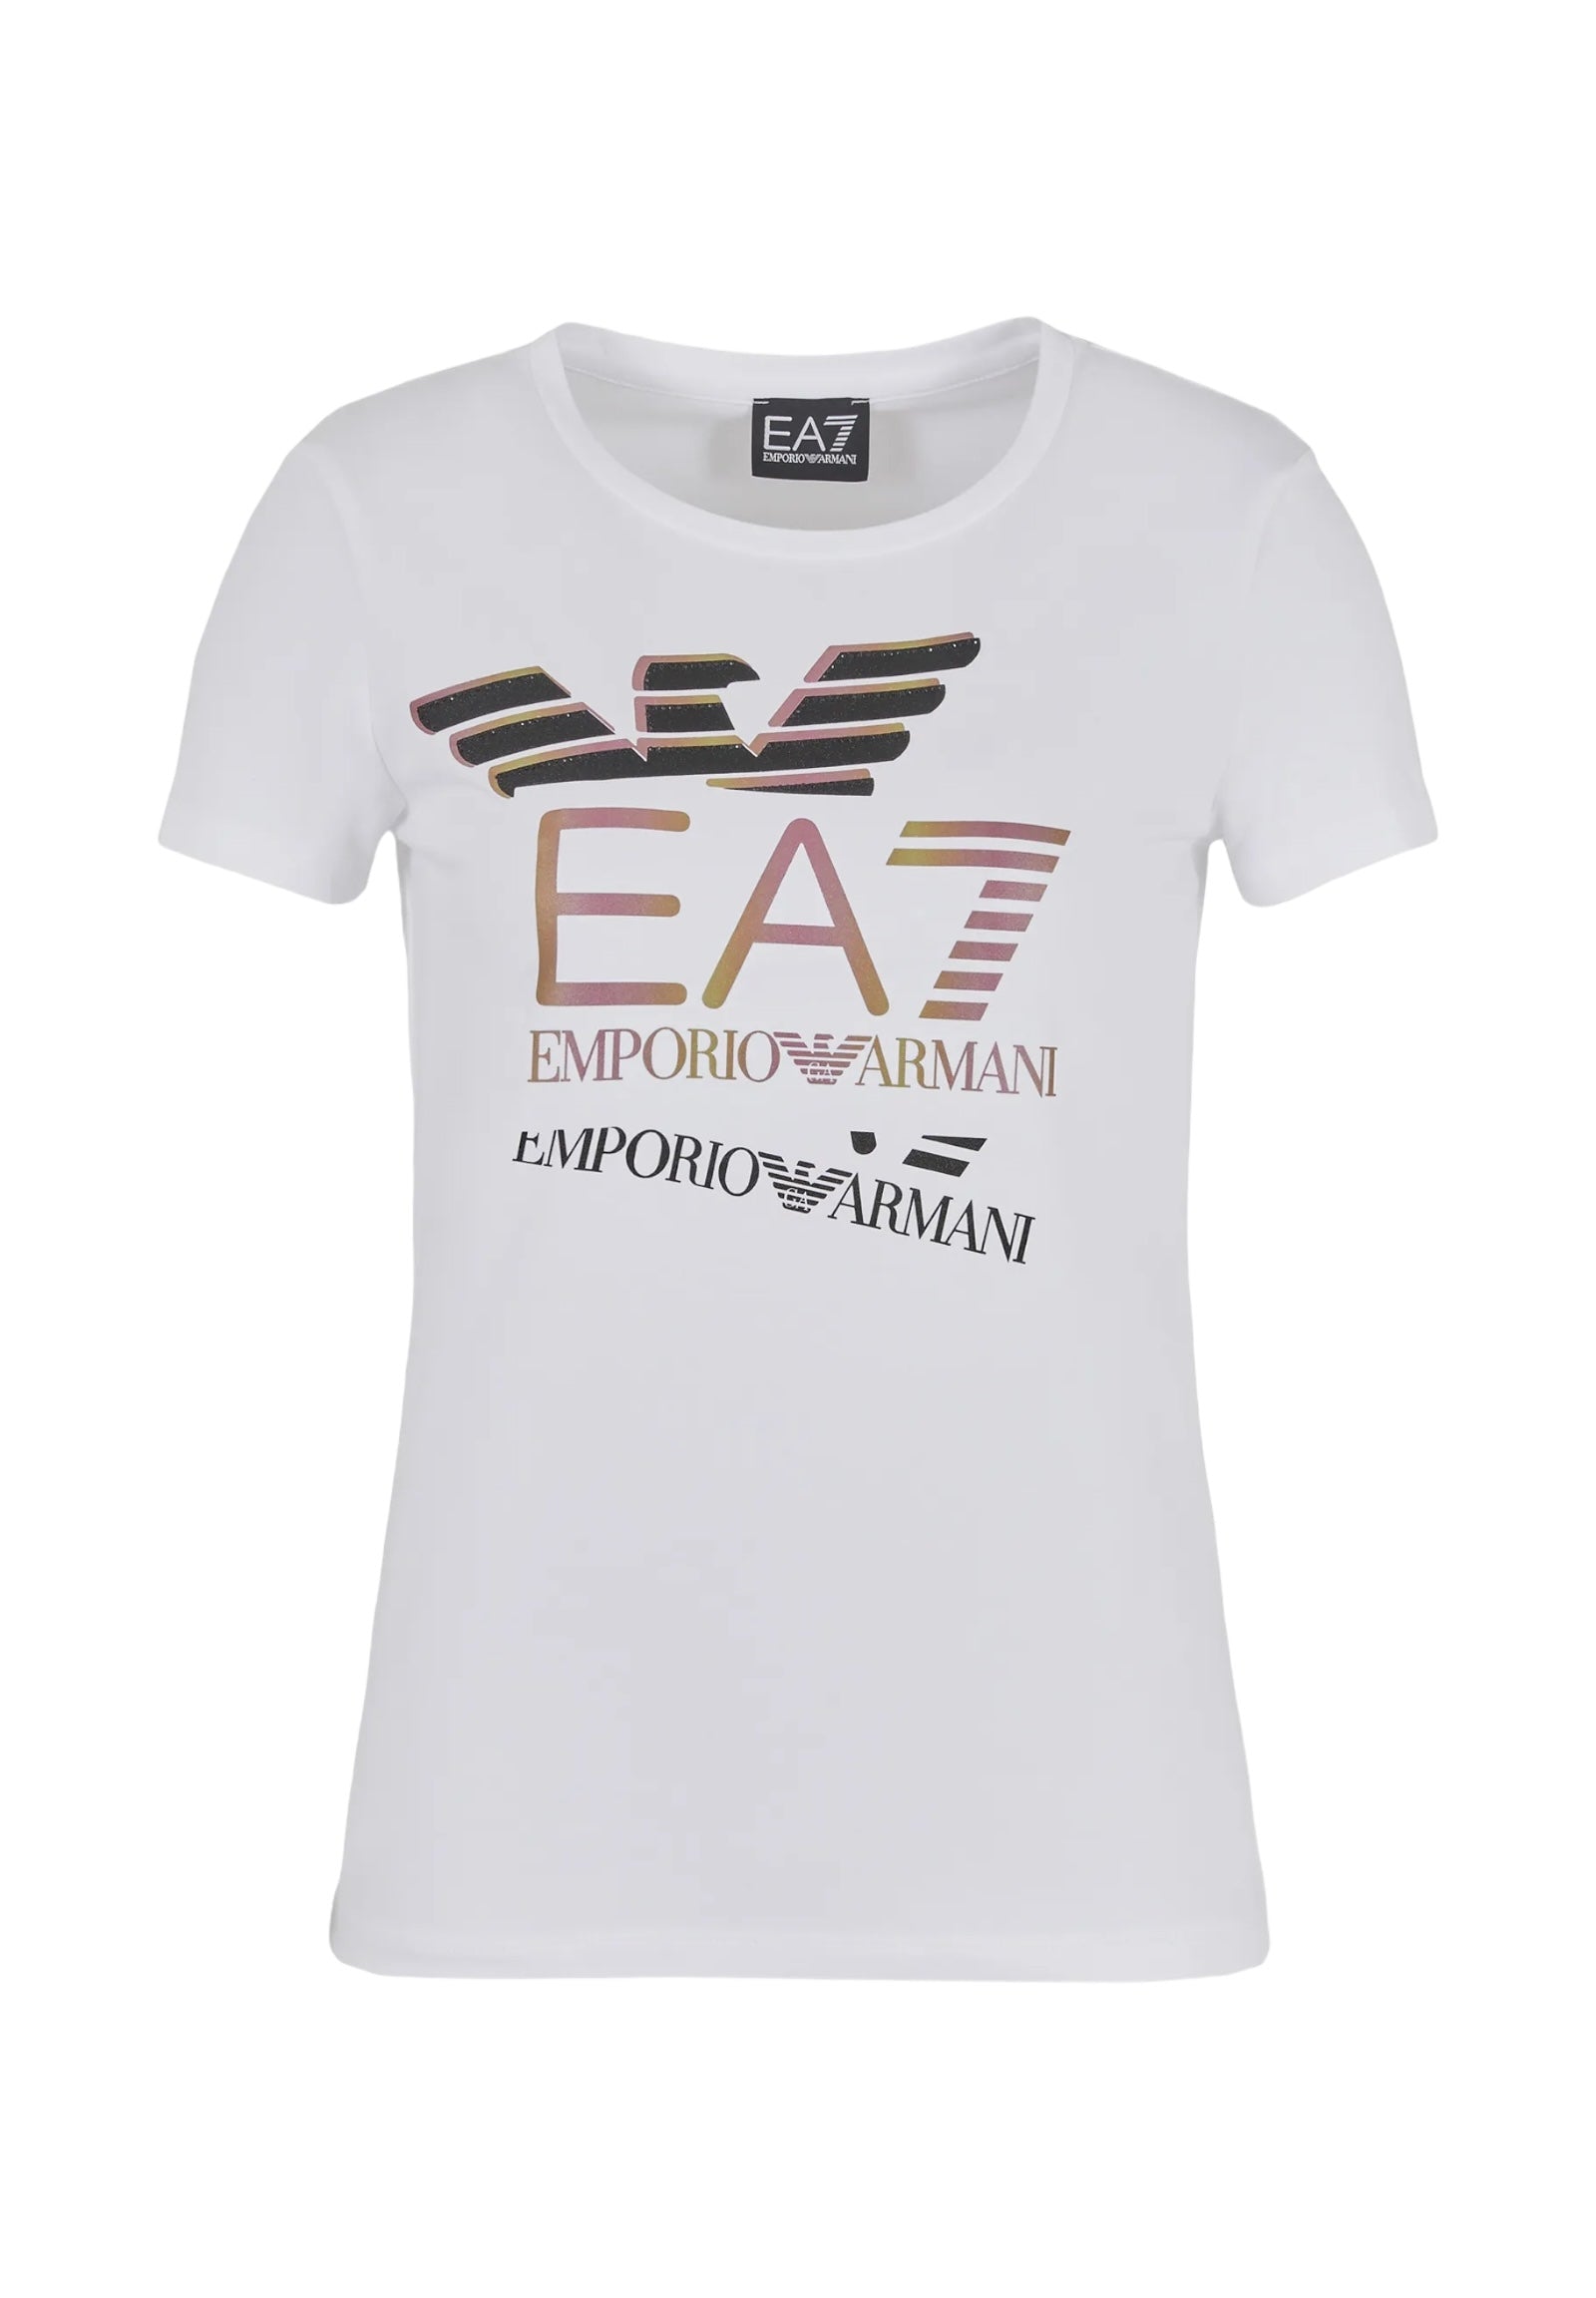 Ea7 Emporio Armani T-Shirt 3dtt30 White